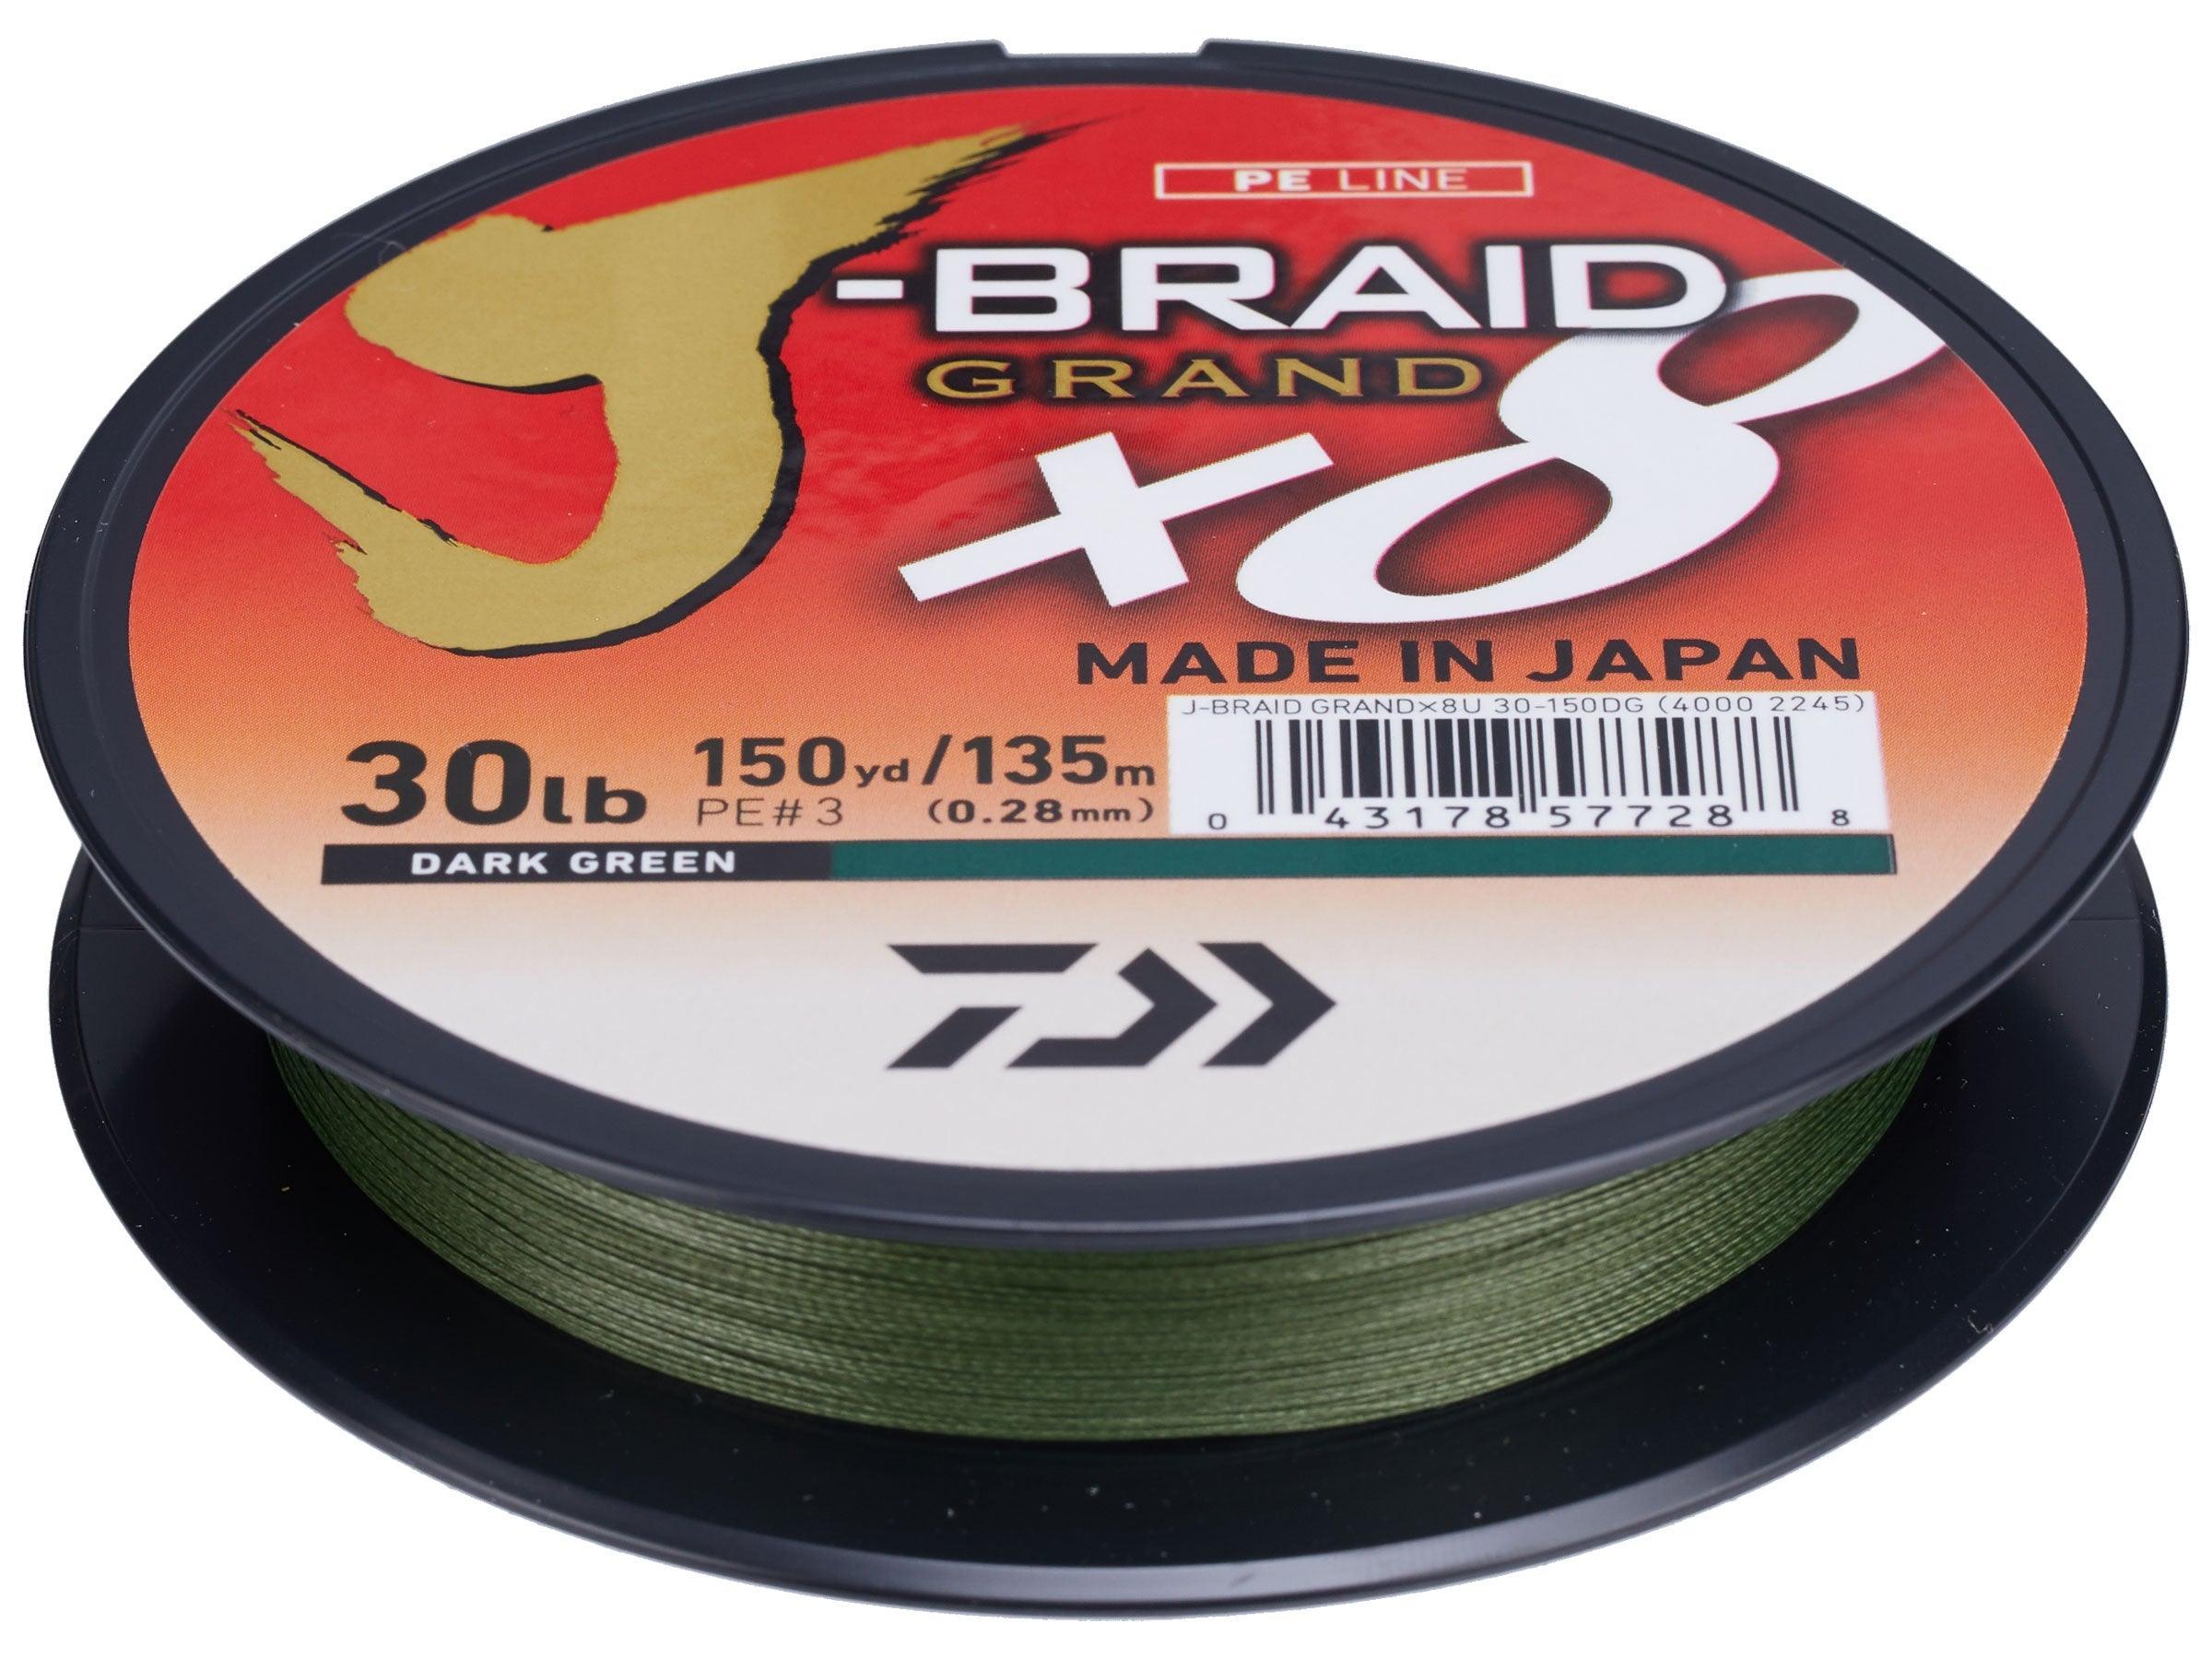 Daiwa 6 lb J-Braid X8 Grand Braided Line Chartreuse, 150 yards